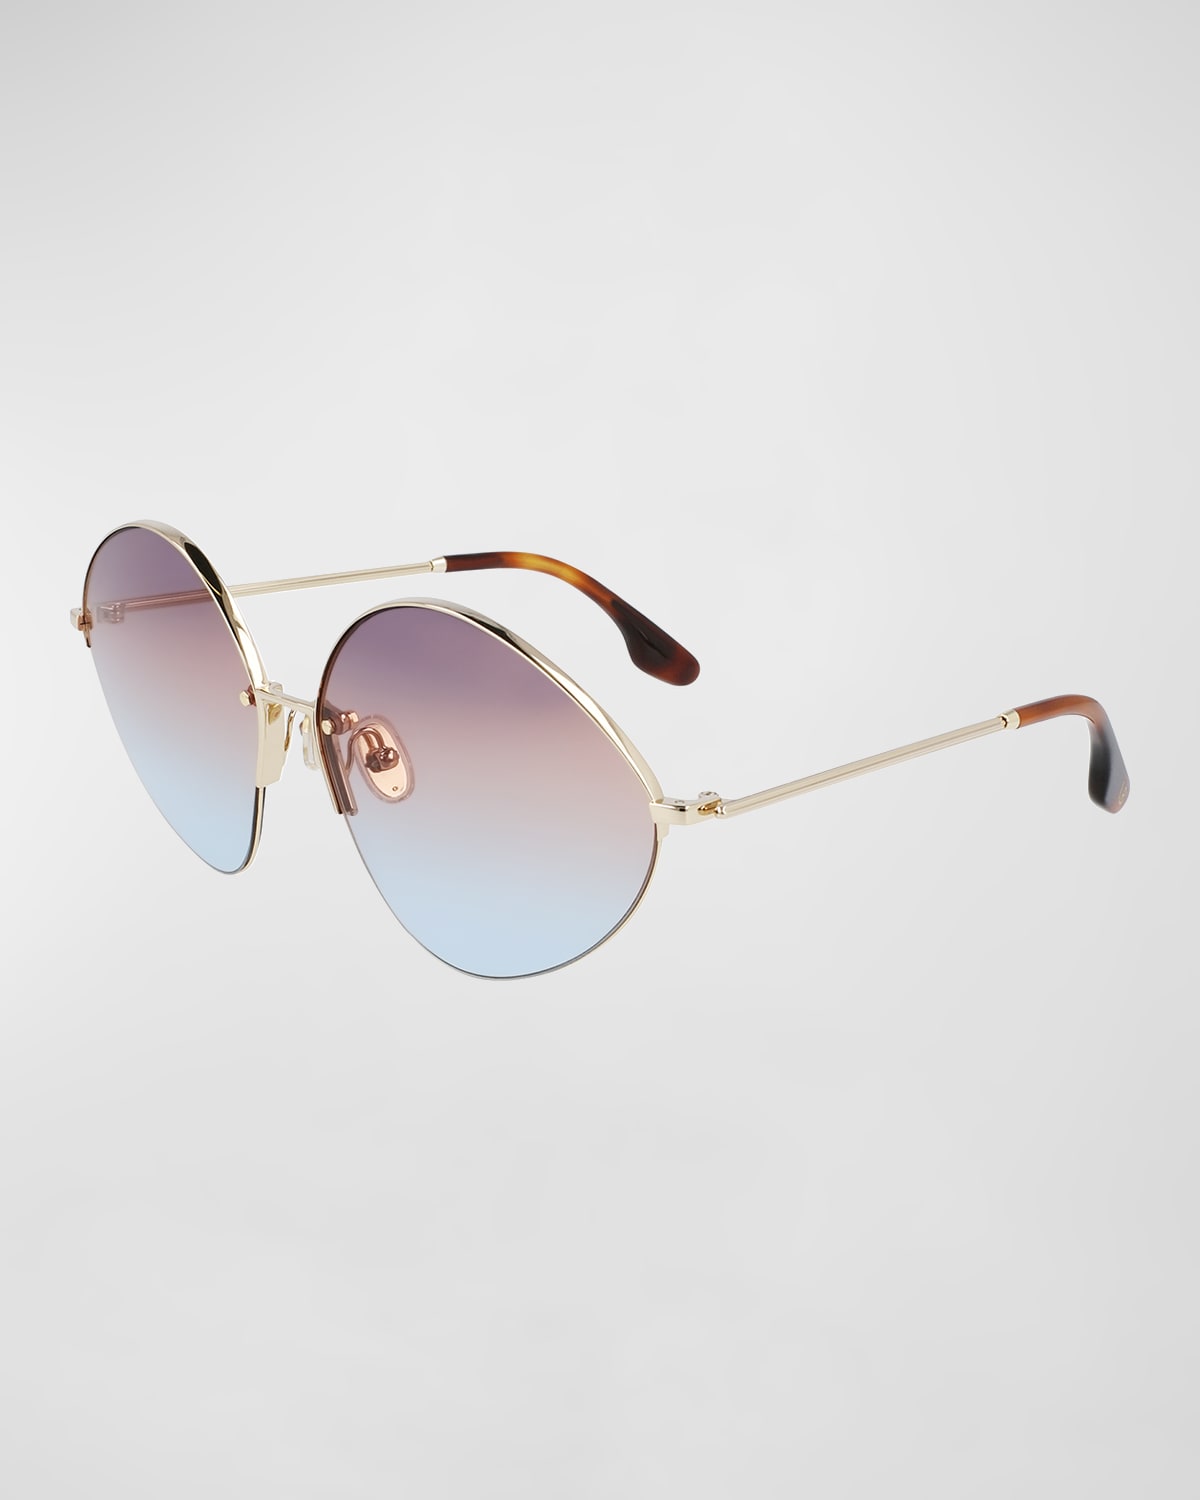 V-Star Geometric Oval Metal Sunglasses